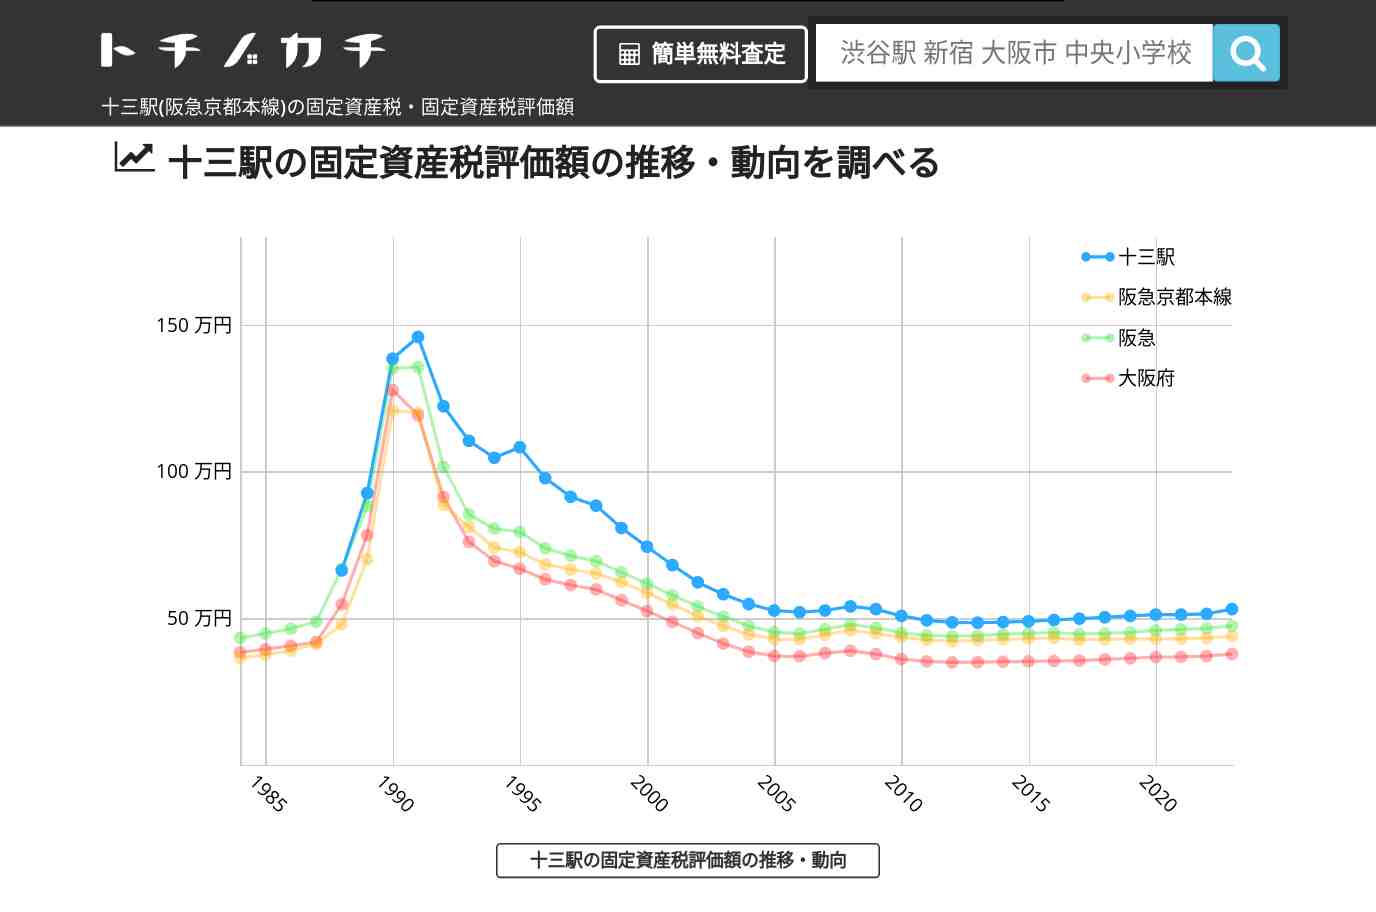 十三駅(阪急京都本線)の固定資産税・固定資産税評価額 | トチノカチ